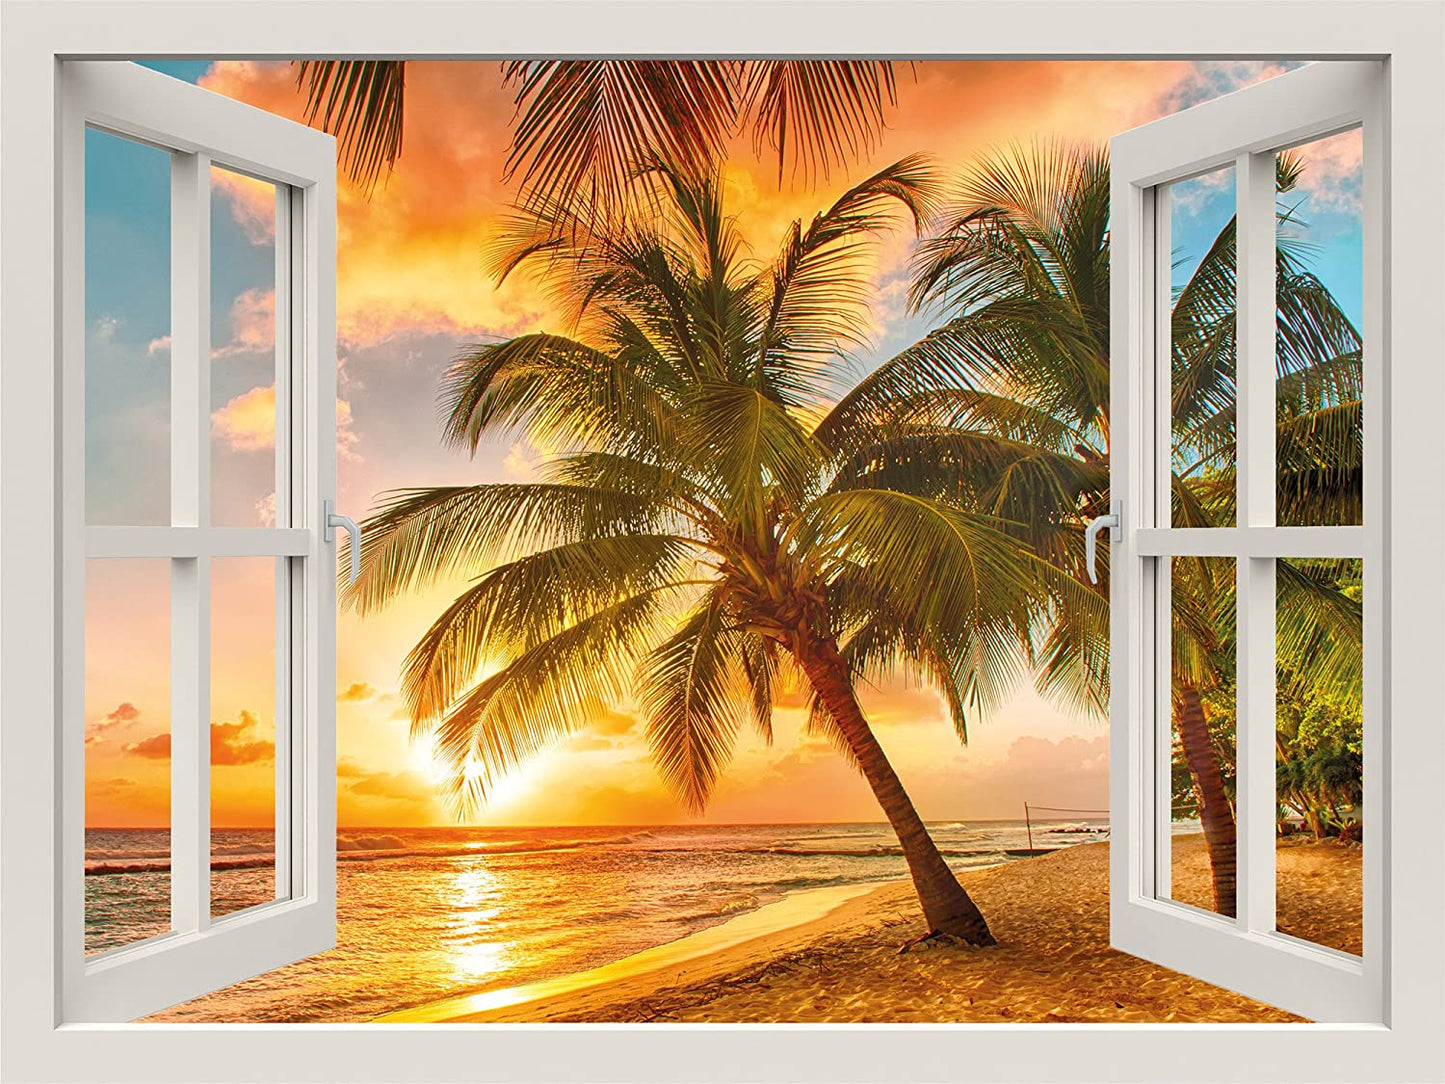 PICSonPAPER Leinwandbild Fenster zum Traumstrand, 40 cm x 30 cm, Dekoration, Kunstdruck, Wandbild, Geschenk, Leinwand Natur, Meer, Strand, Sonne, Palmen